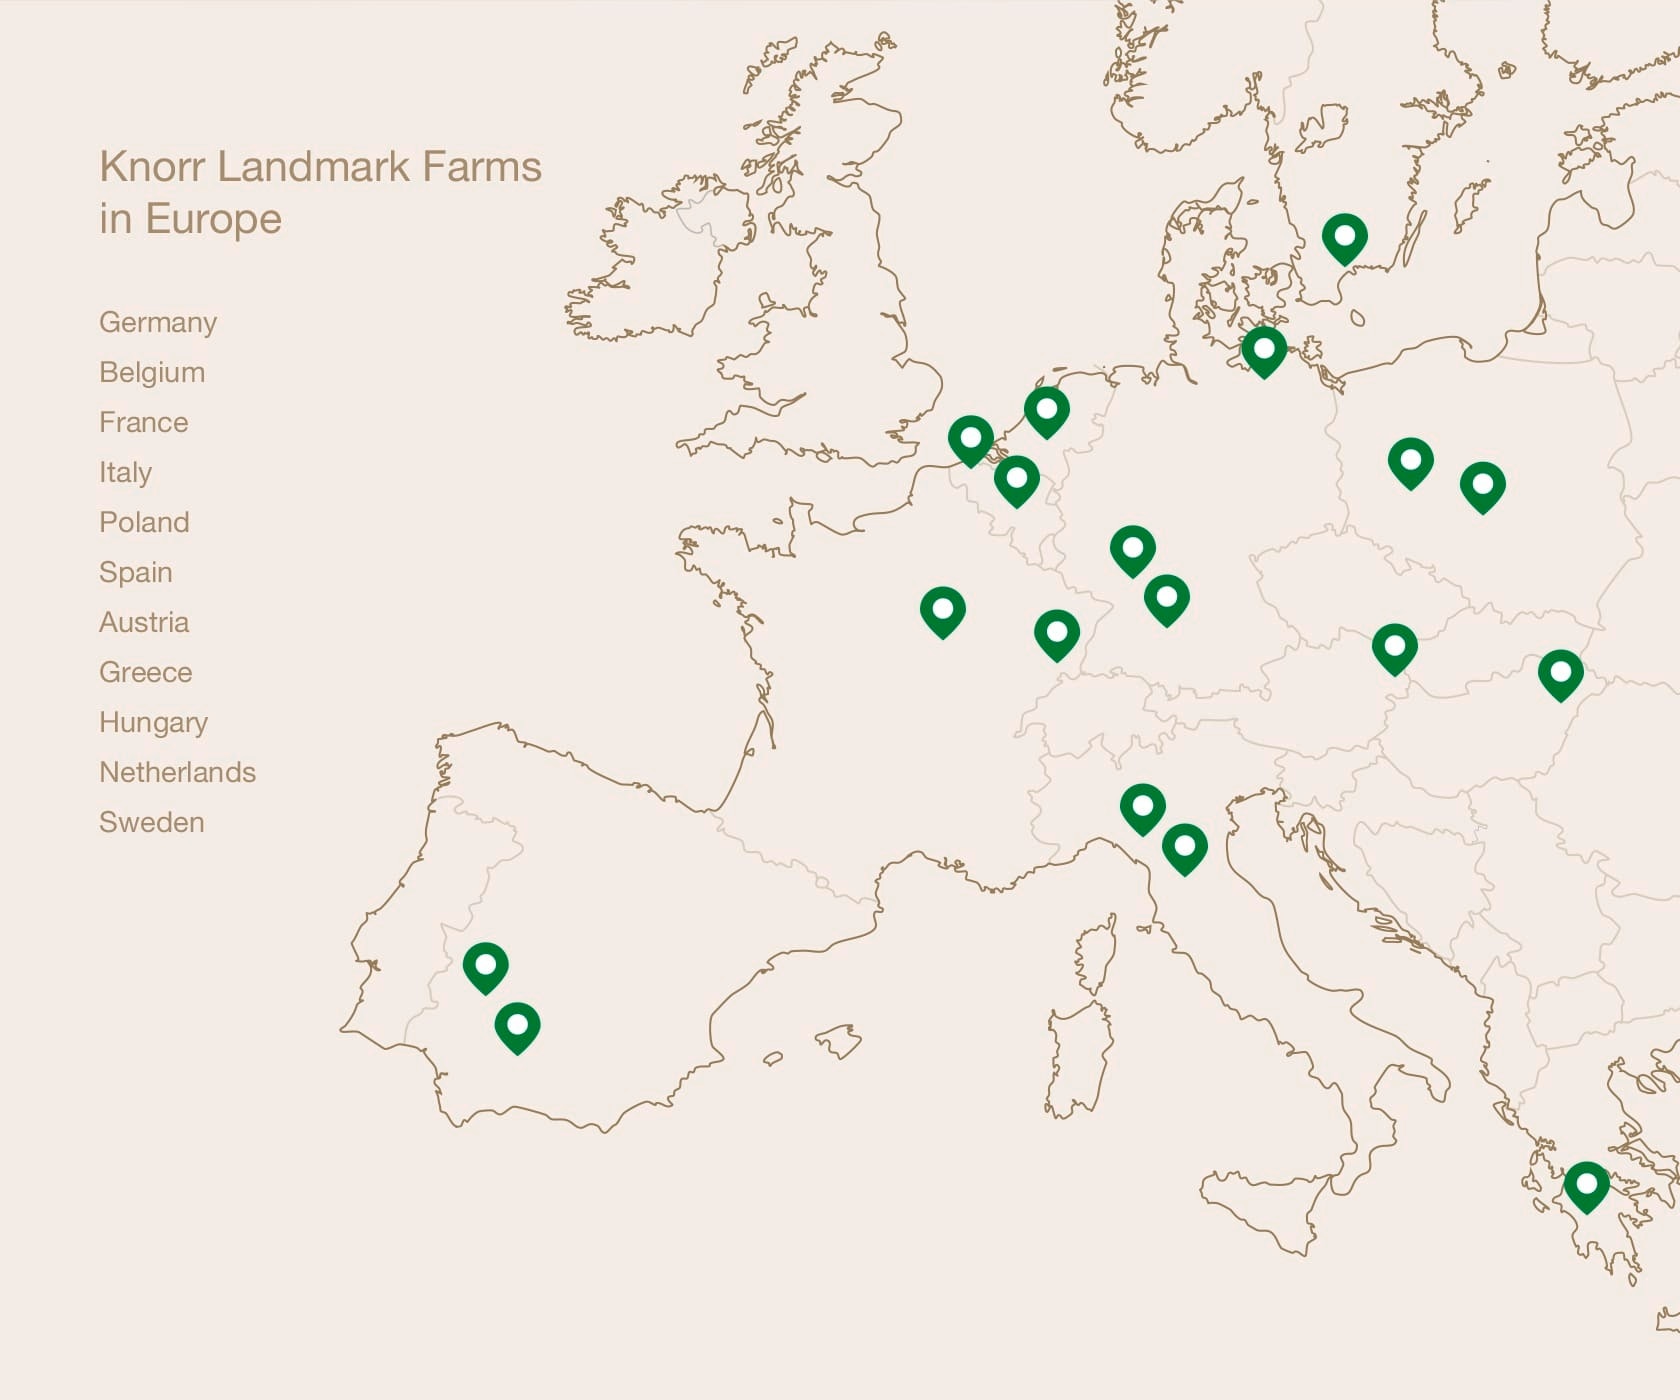 Knorr Landmark farms in Europe | Germany, Belgium, France, Italy, Poland, Spain, Austria, Greece, Hungary, Netherlands, Sweden